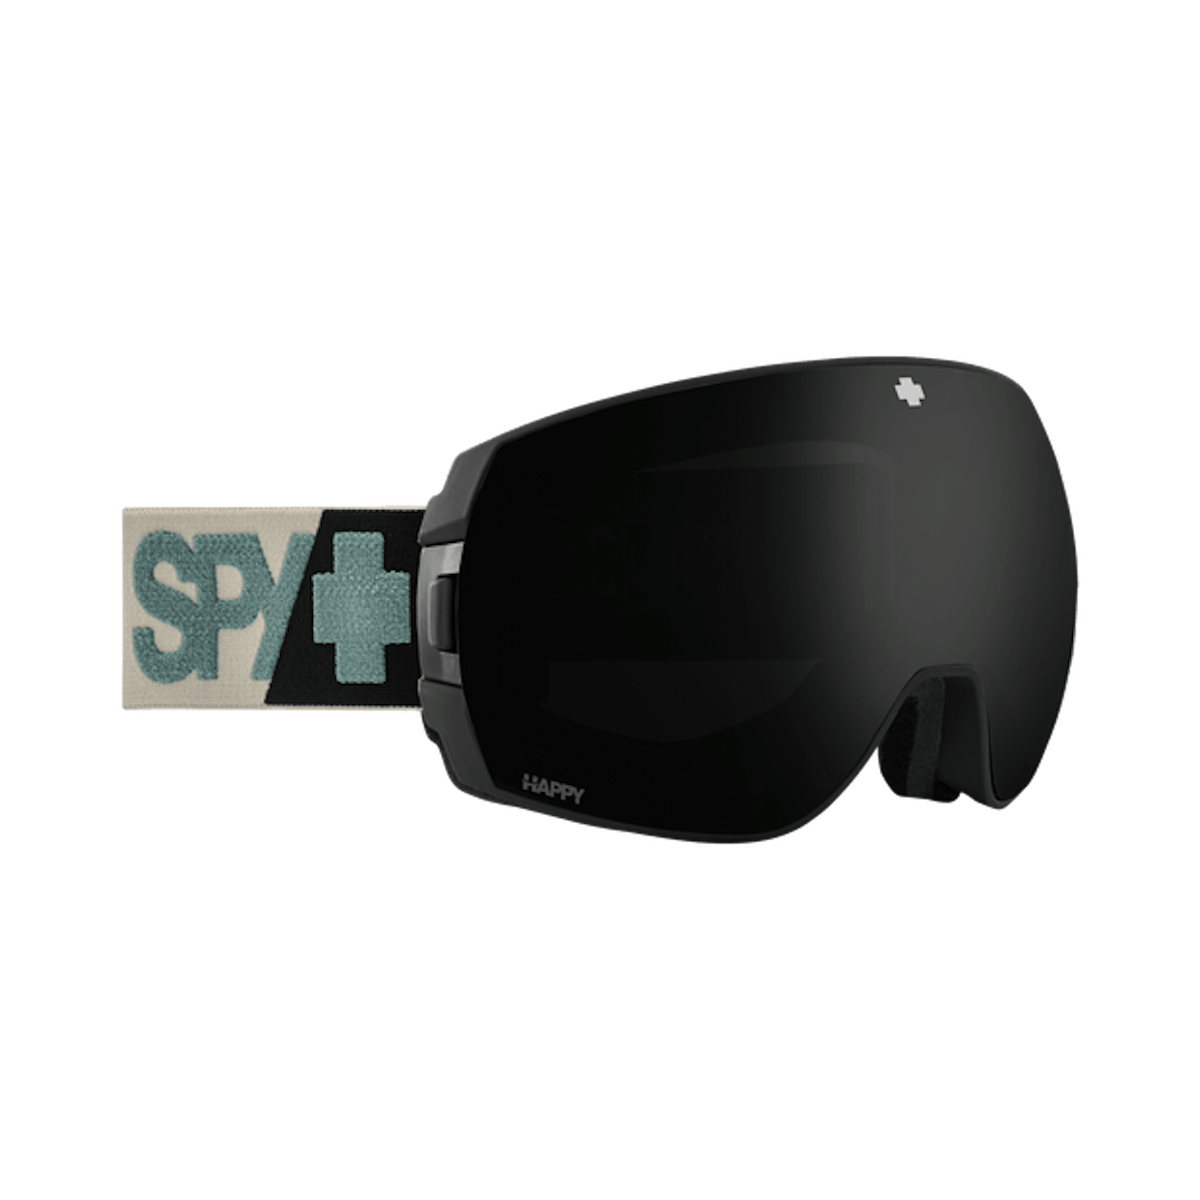 SPY LEGACY SE SNOW goggles - warm gray